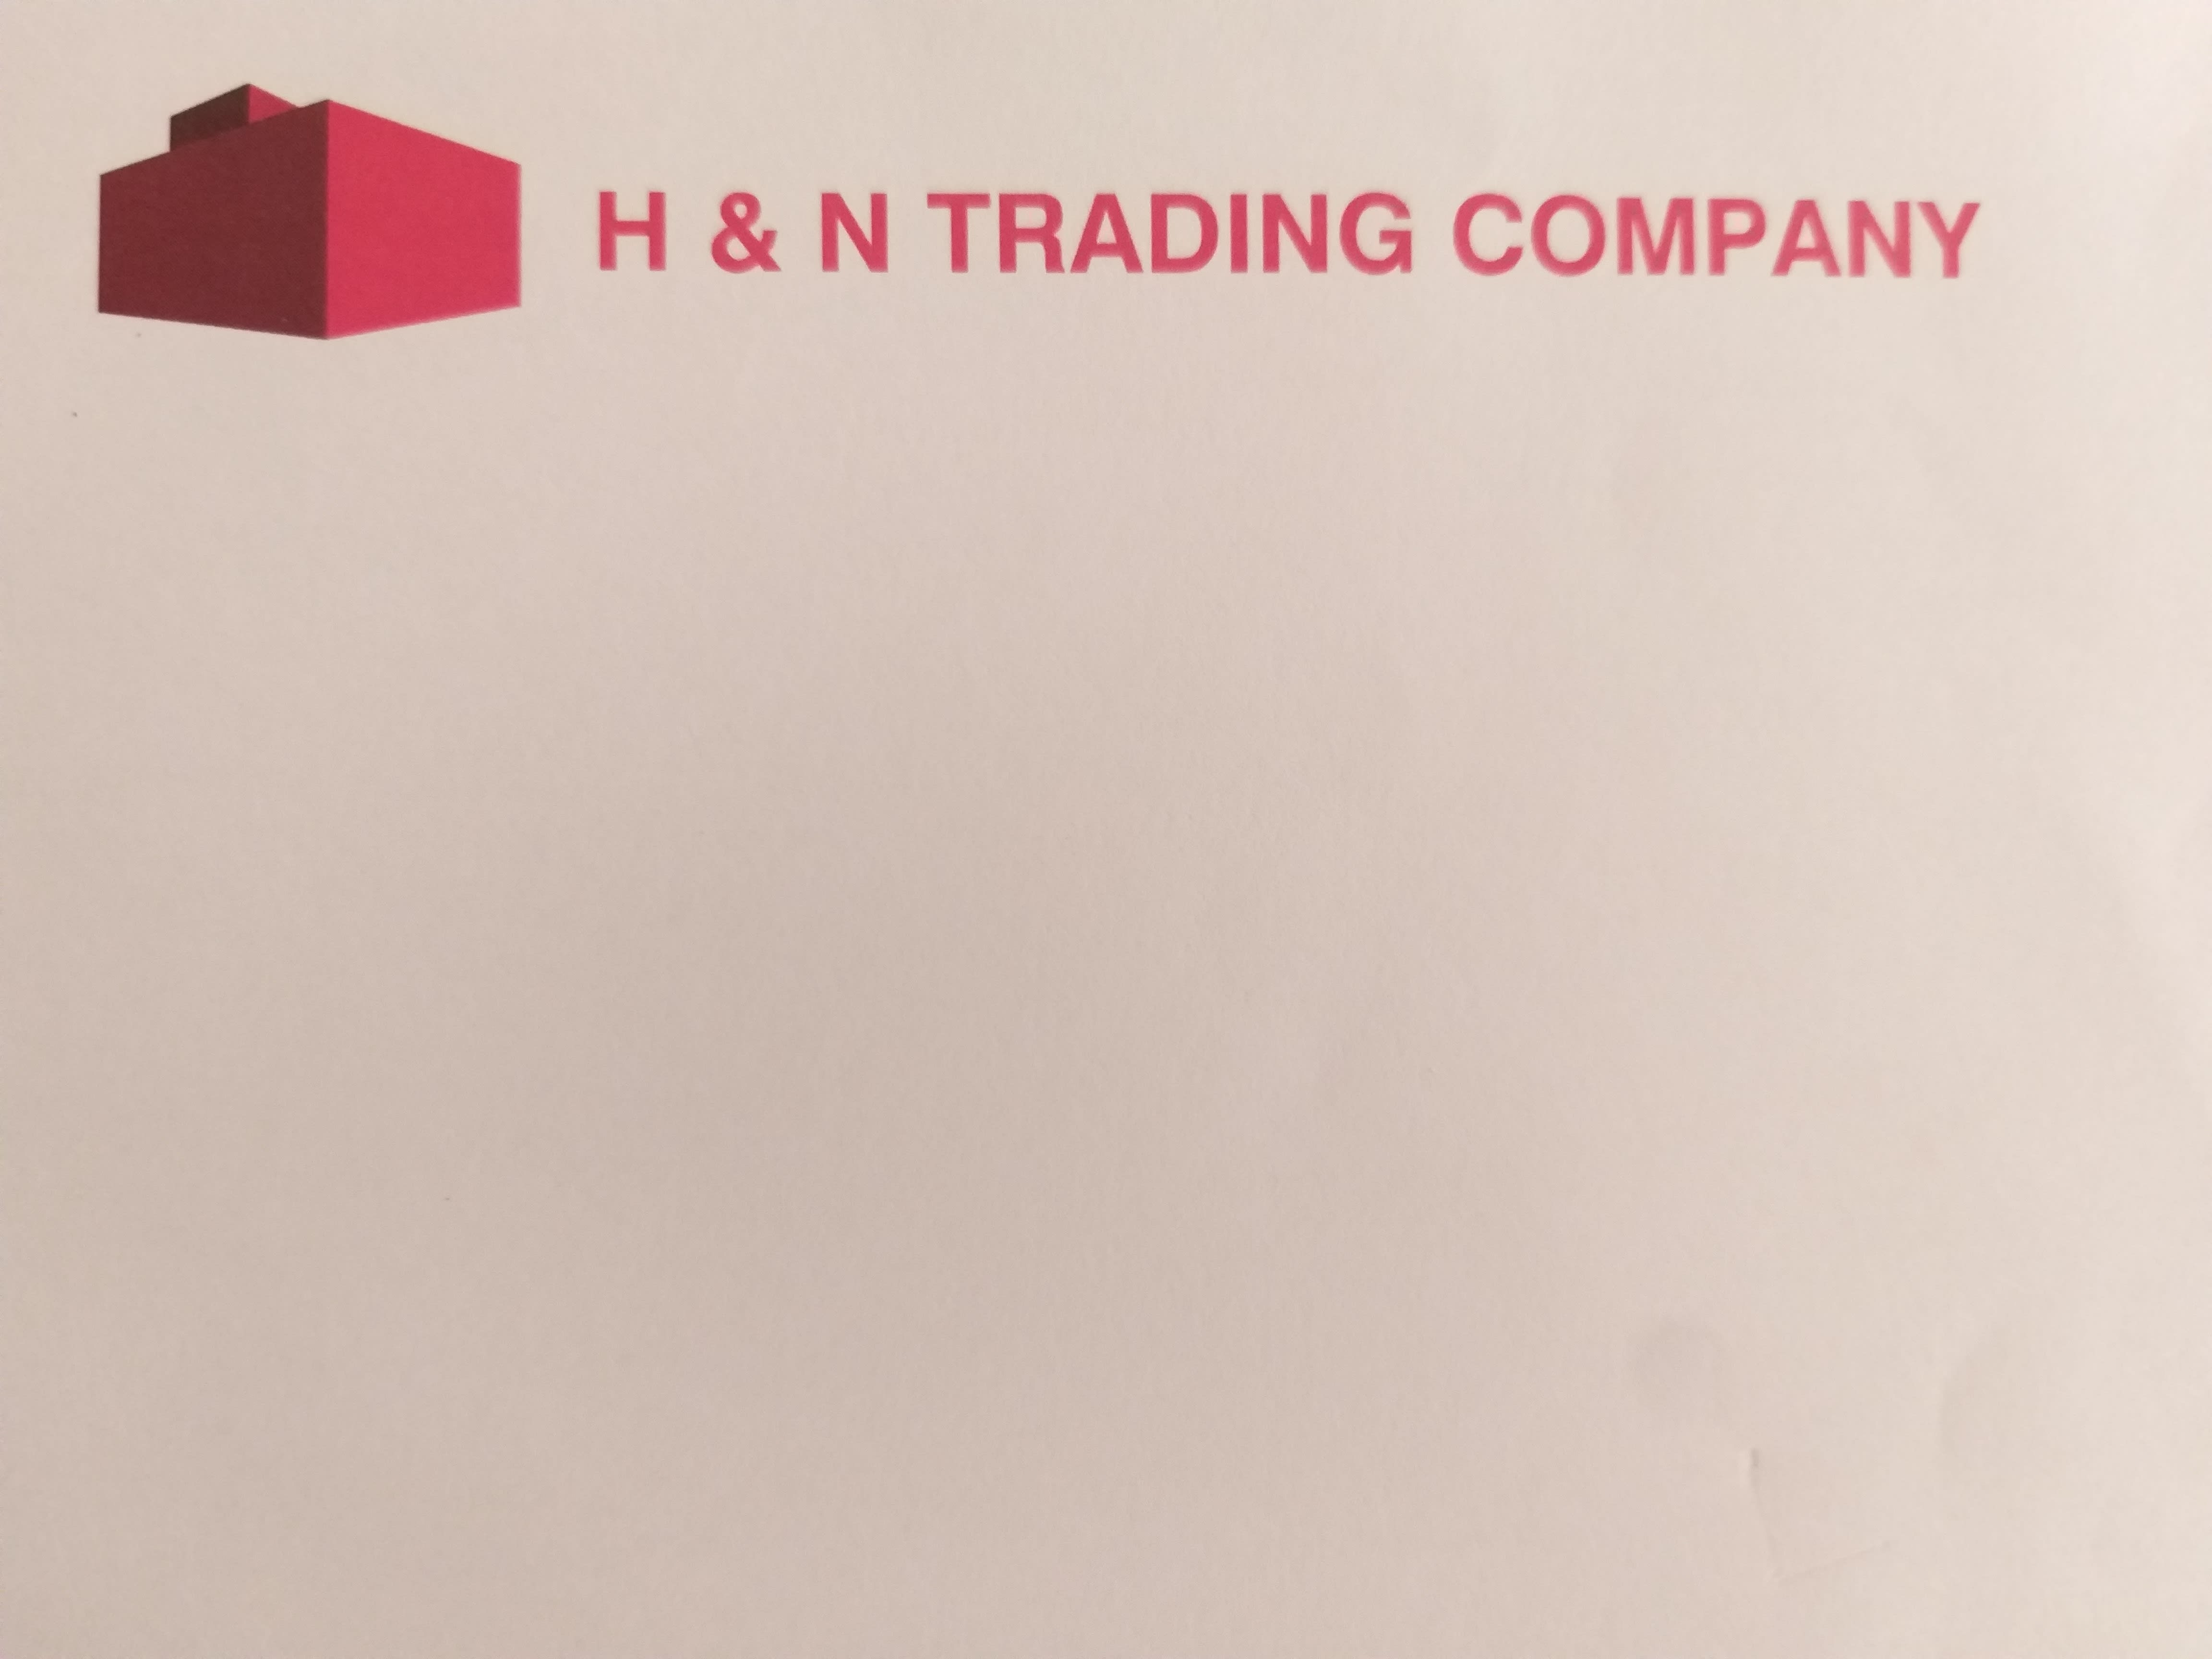 H&N TRADING COMPANY